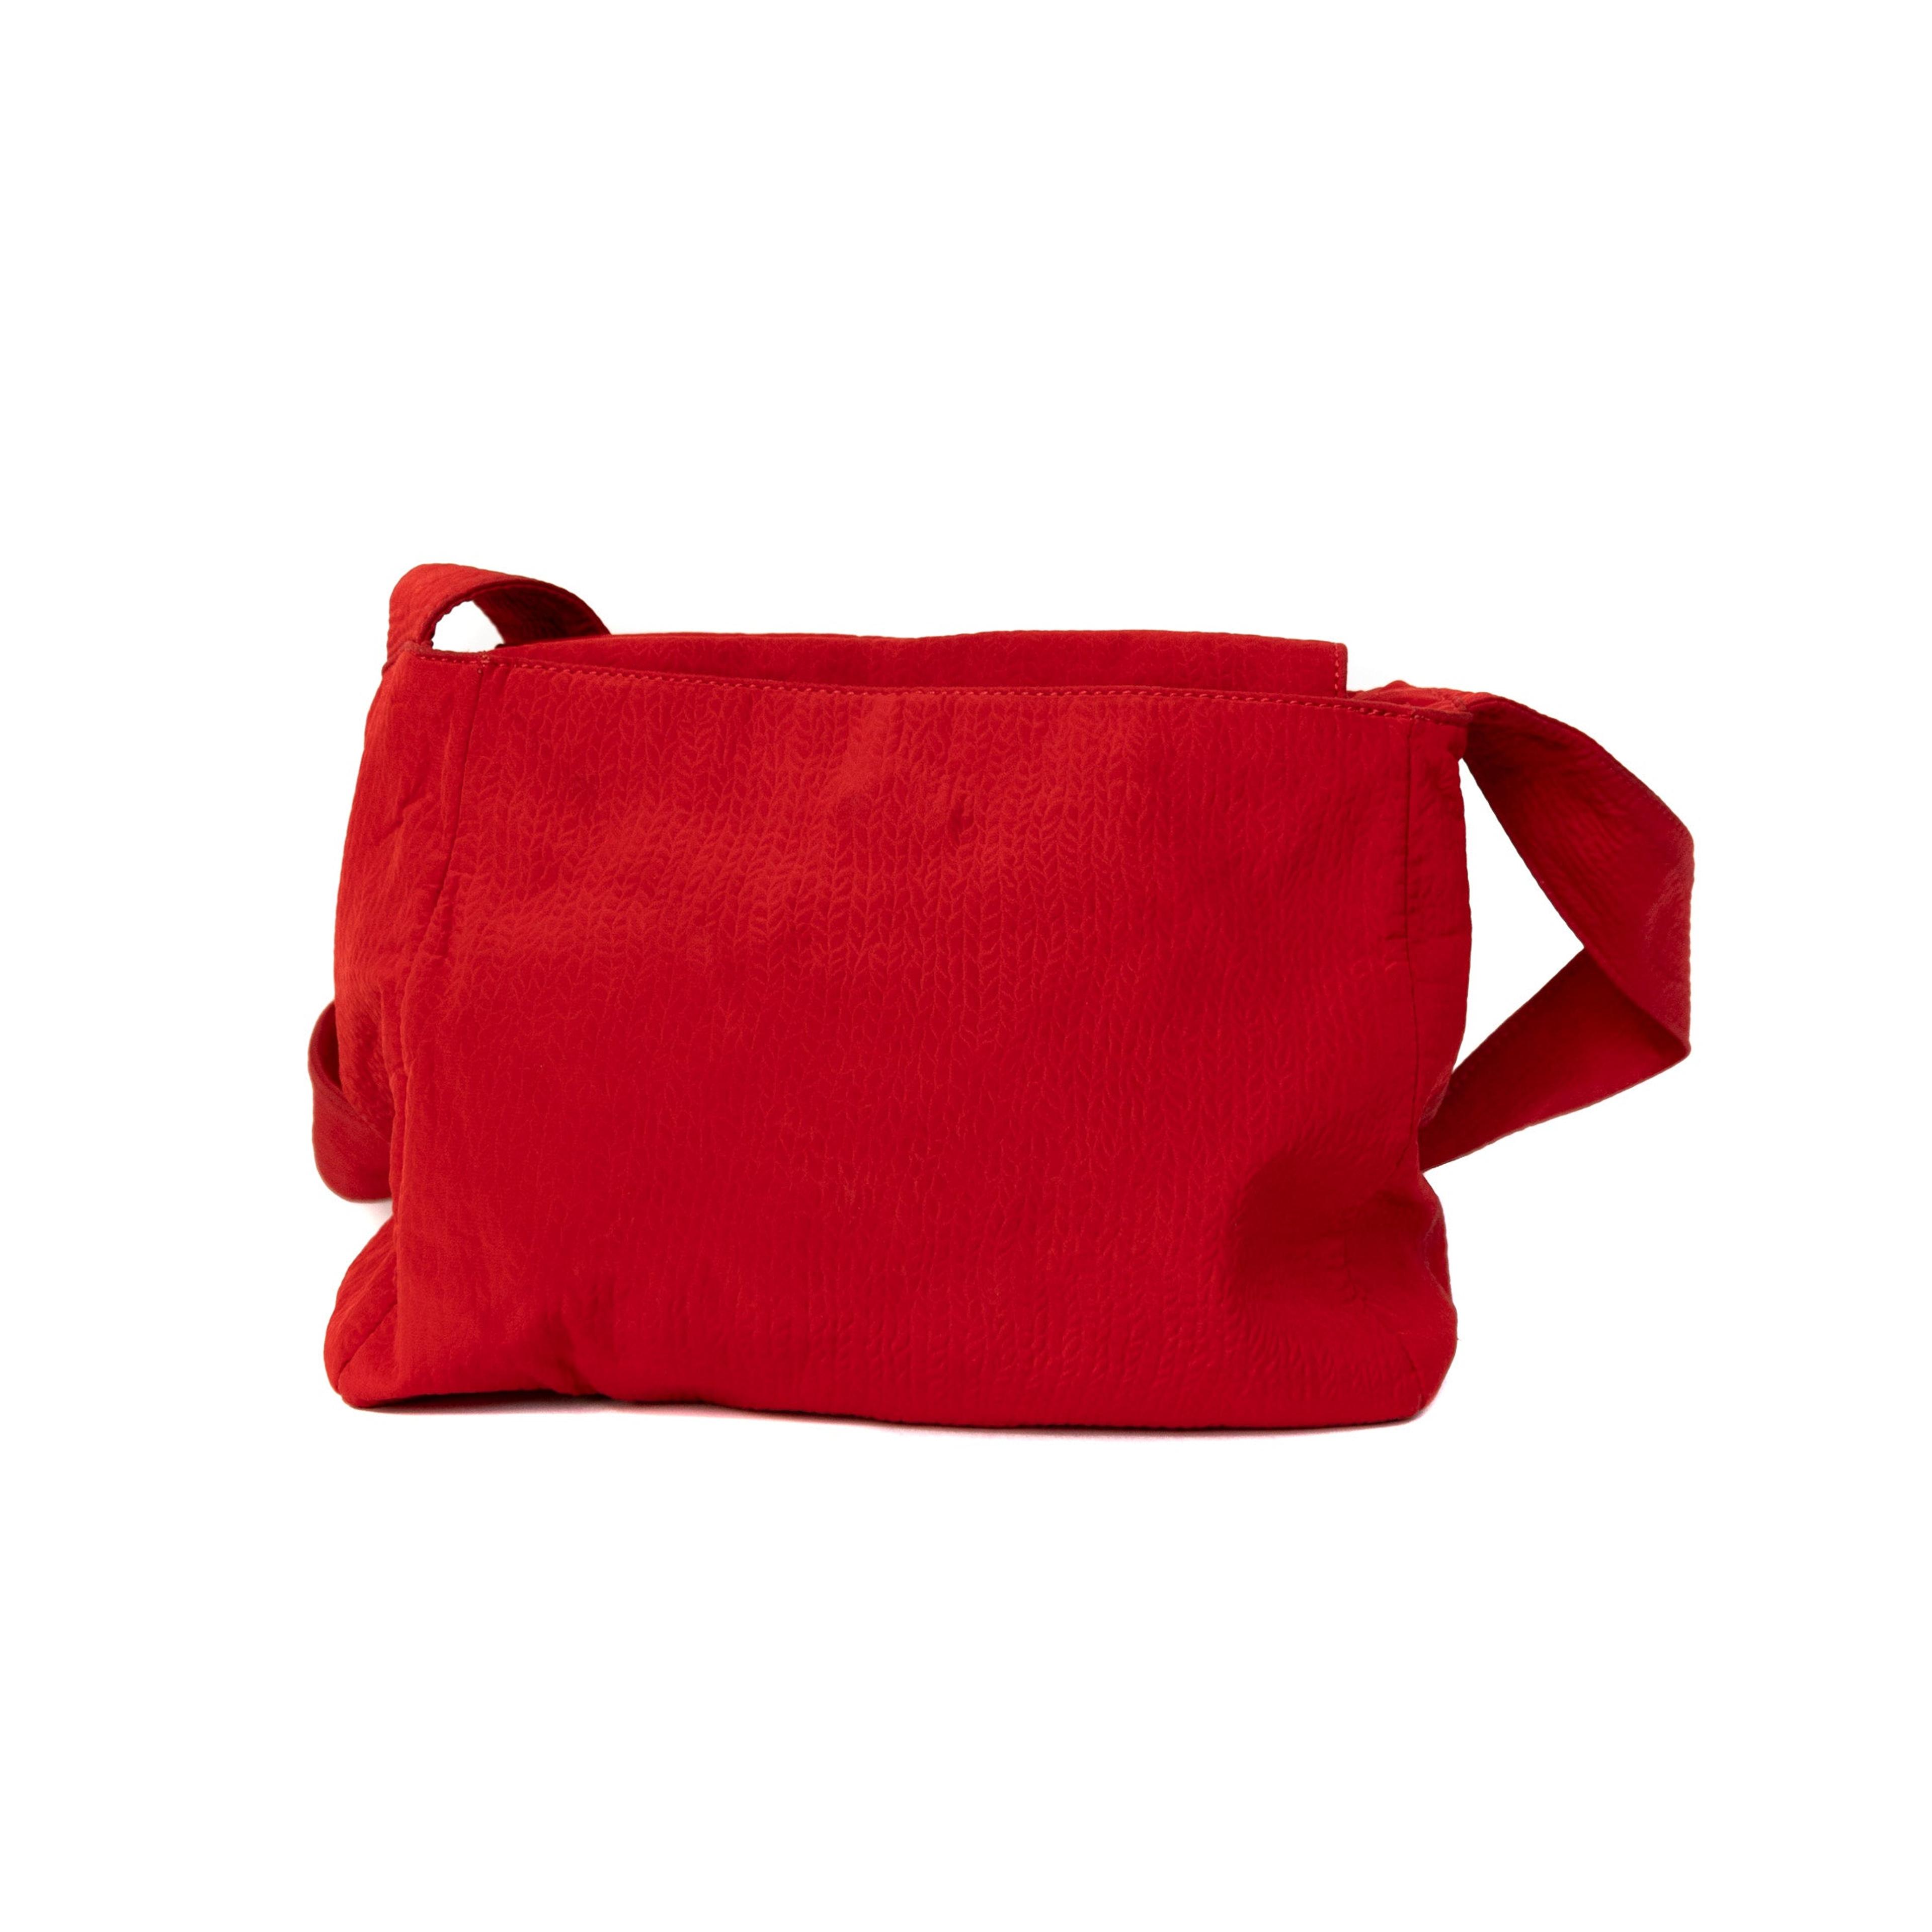 Alternate View 4 of Missoni Red Soft Cross Body Bag